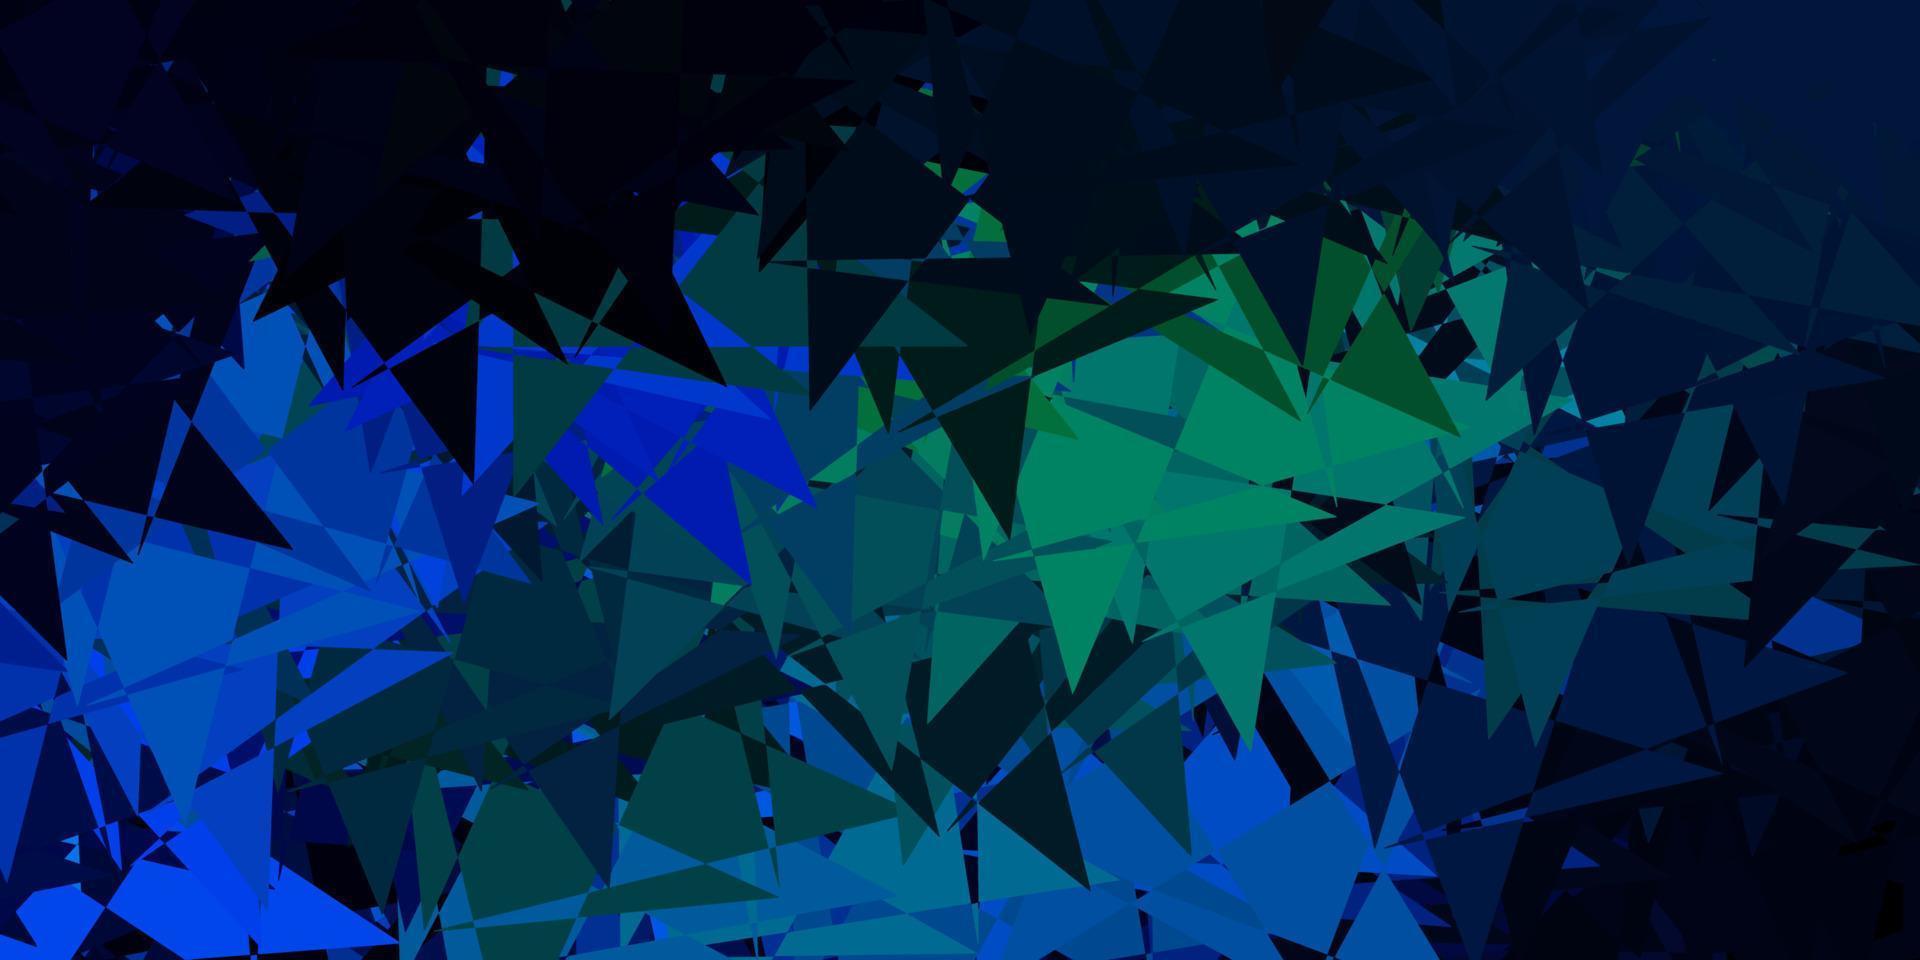 fond de vecteur bleu foncé, vert avec des triangles.